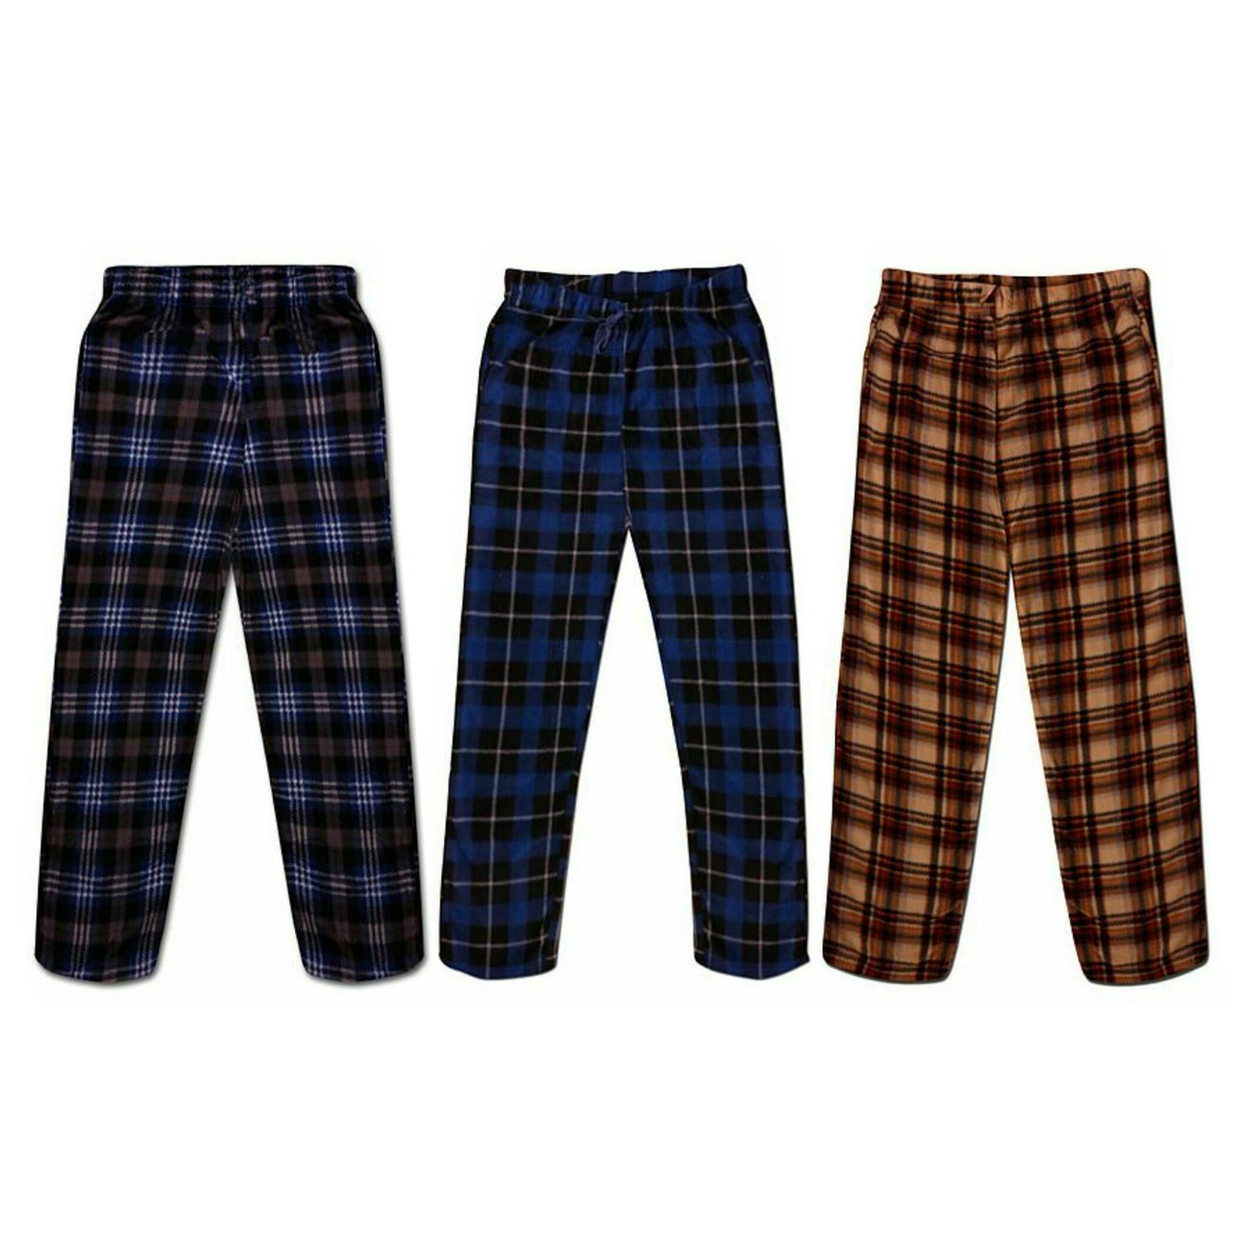 3-Pack: Men's Ultra Soft Cozy Flannel Fleece Plaid Pajama Sleep Bottom Lounge Pants - Medium